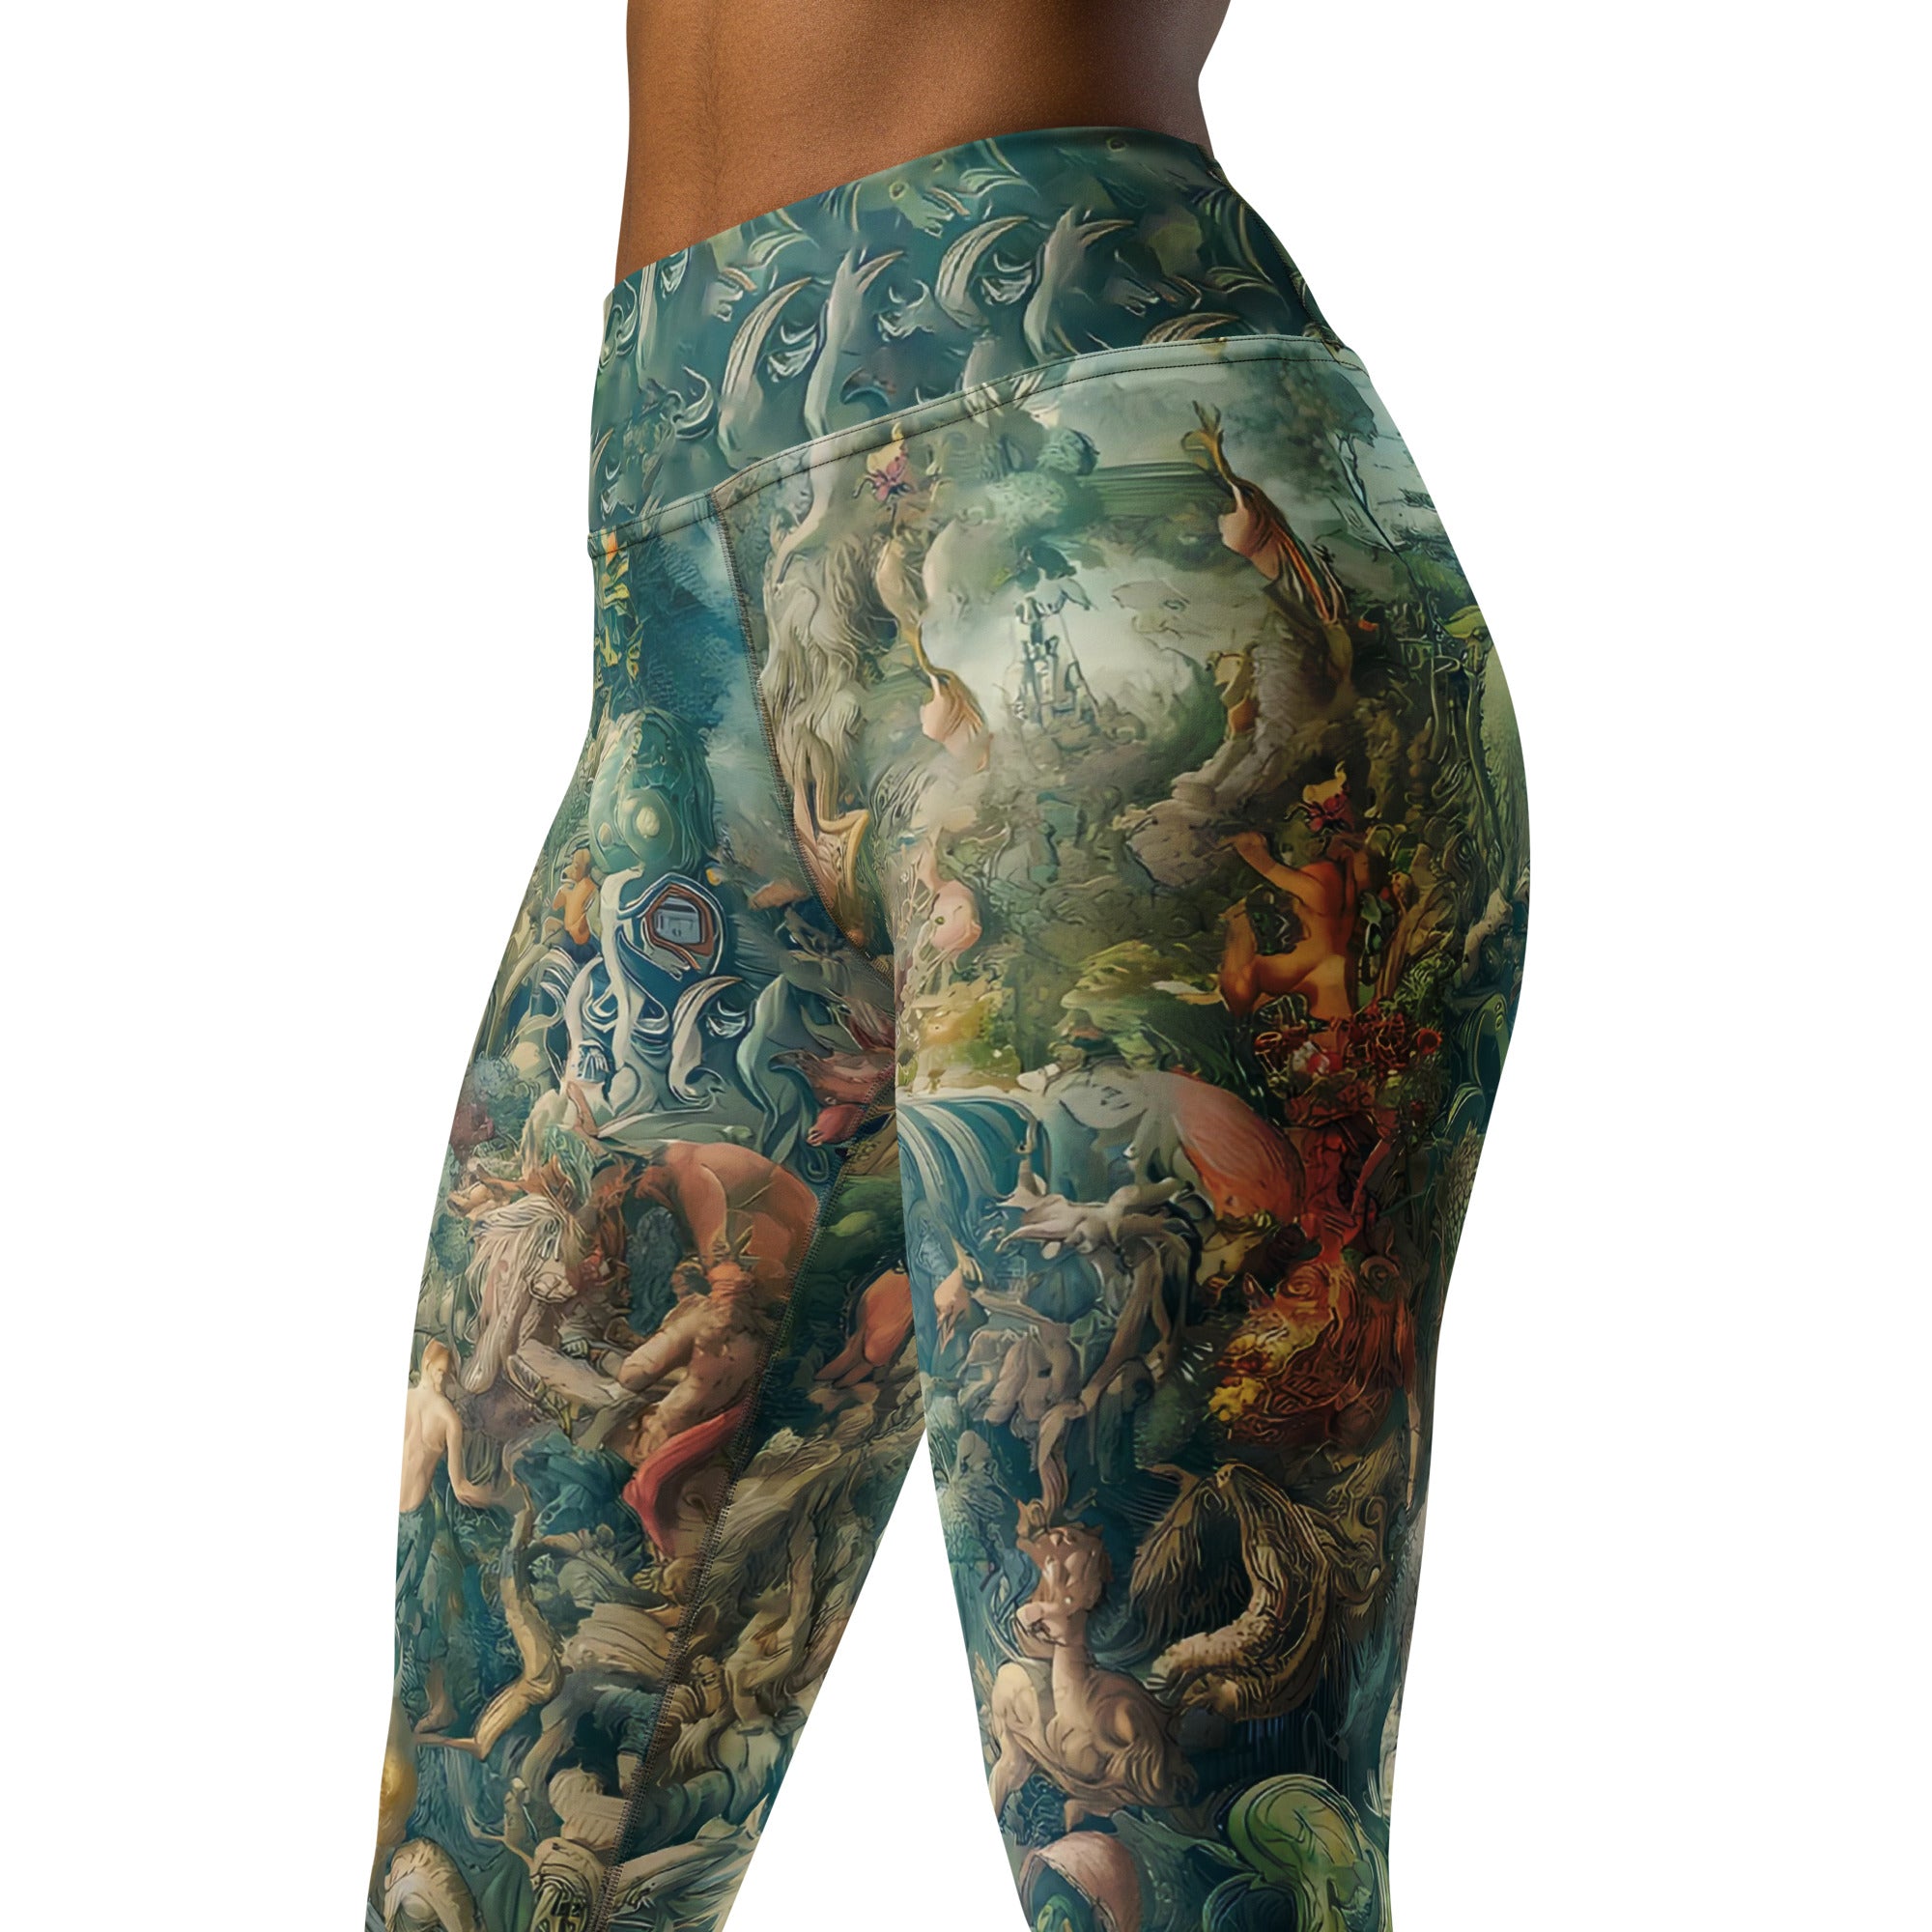 Hieronymus Bosch 'The Garden of Earthly Delights' Famous Painting Yoga Leggings | Premium Art Yoga Leggings